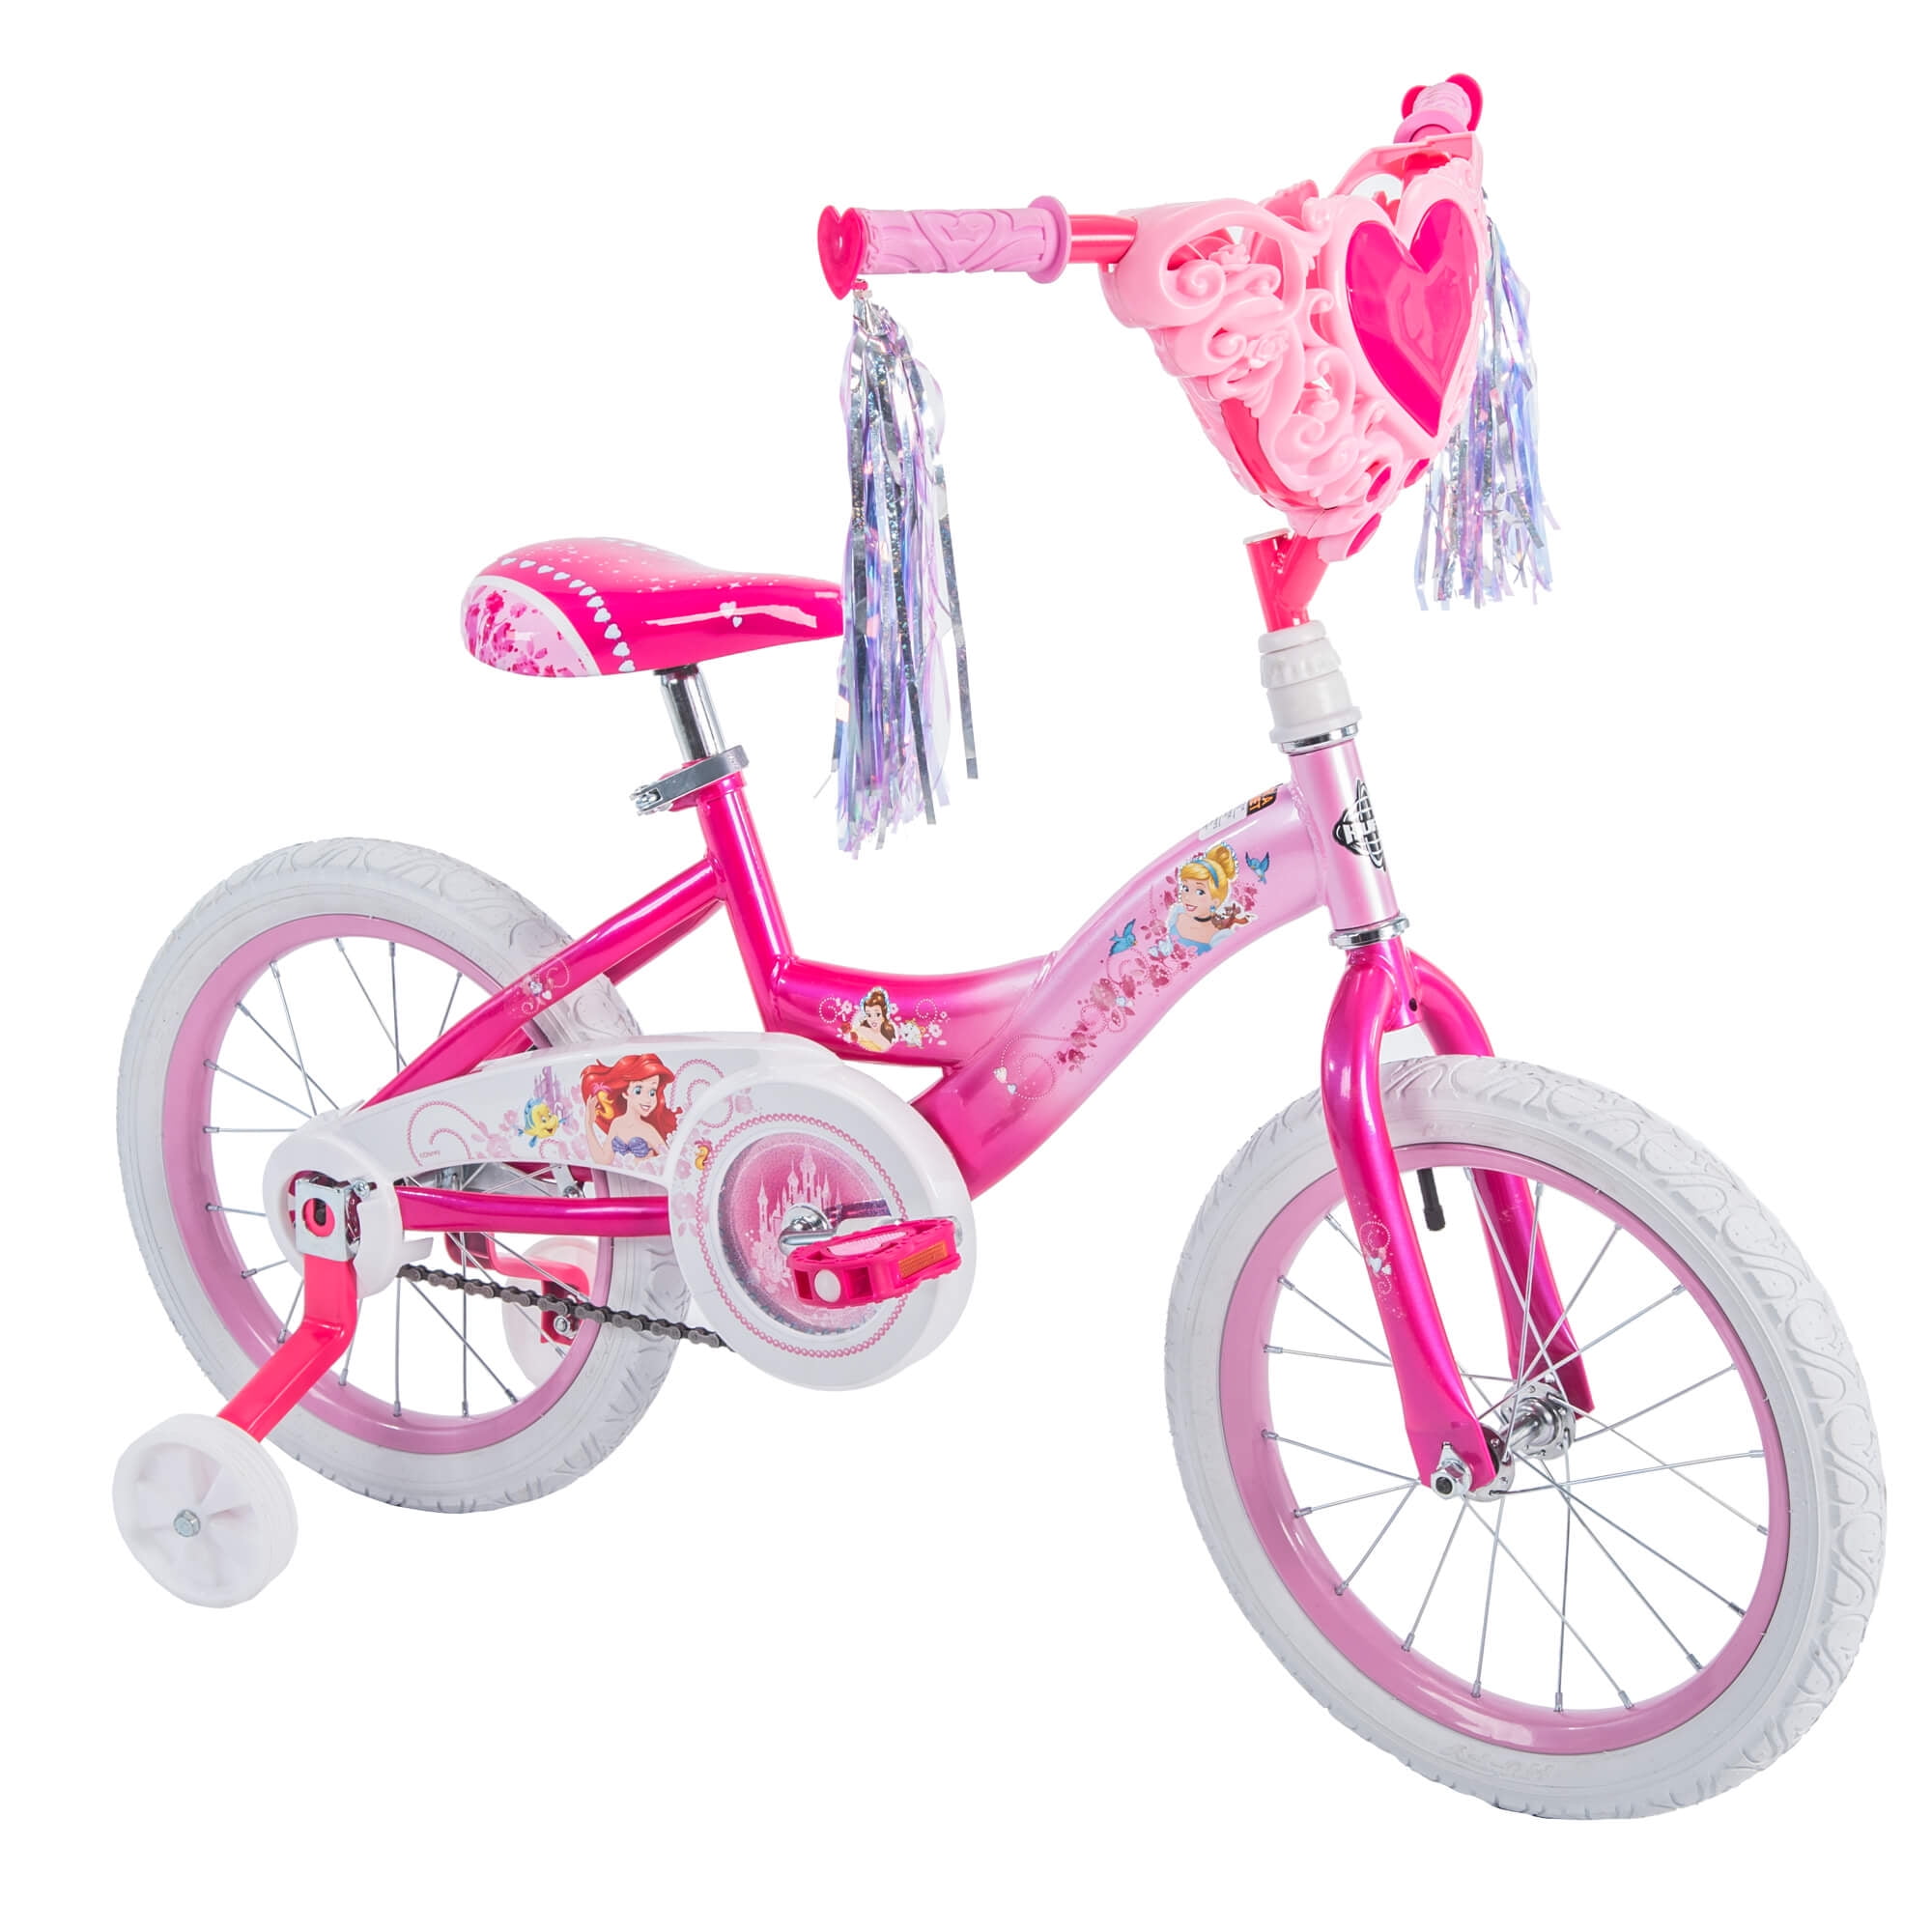 Disney Princess 16" Girls' Bike by Huffy, Pink Walmart Inventory